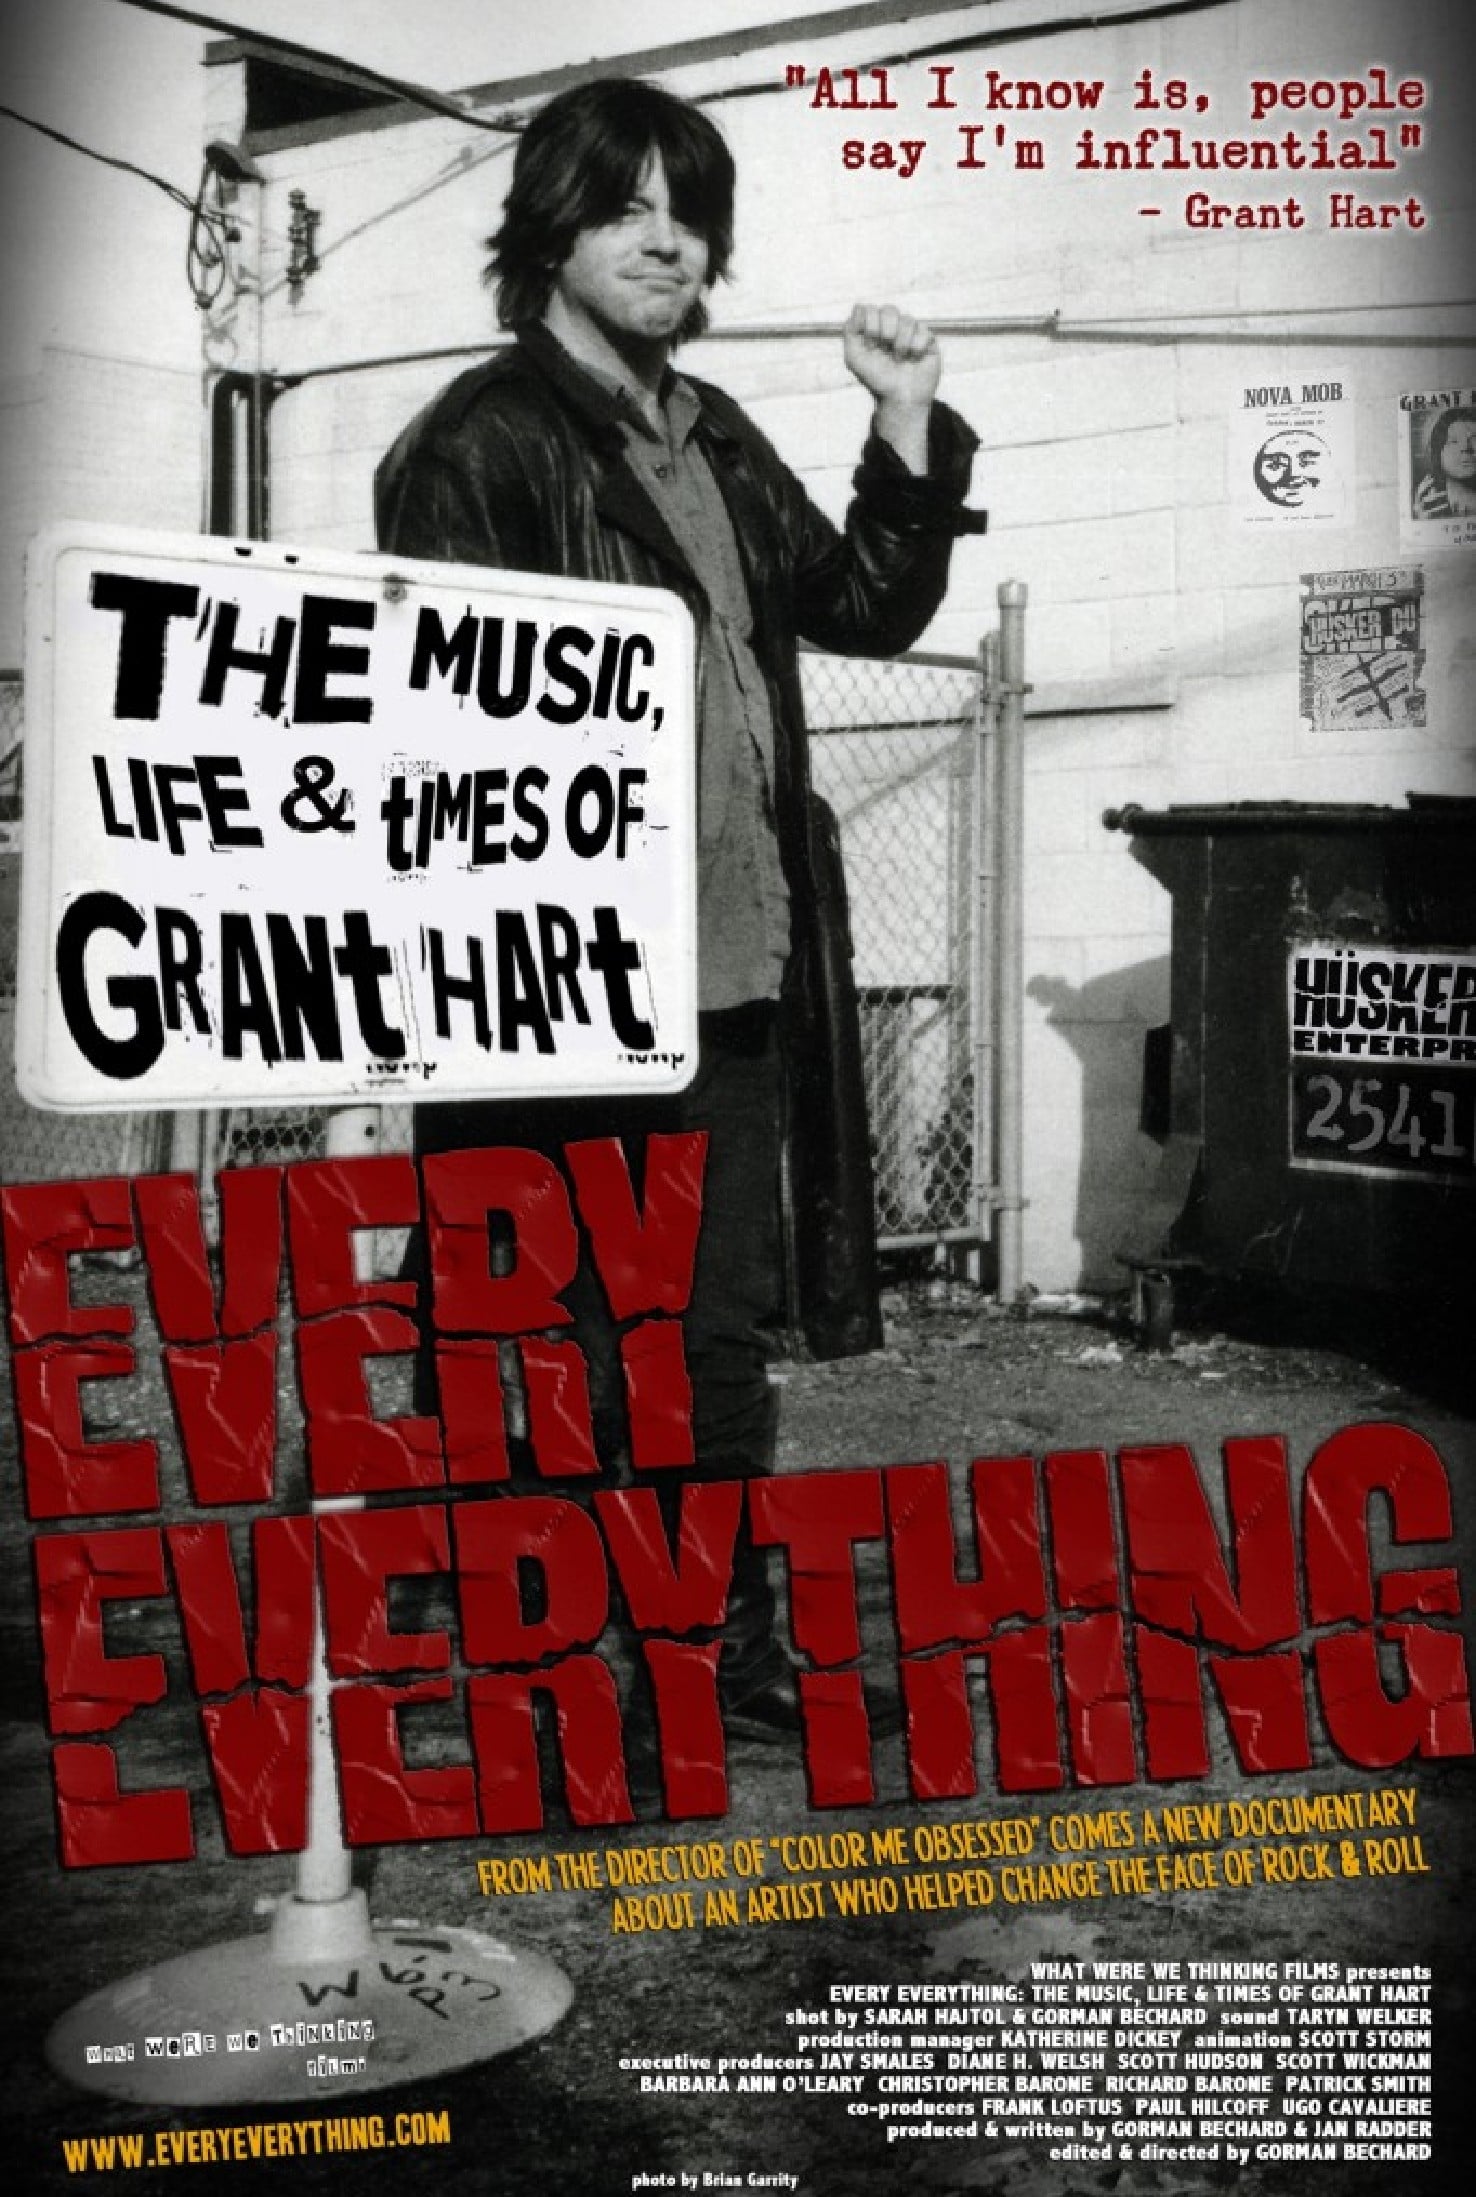 Caratula de EVERY EVERYTHING: THE MUSIC, LIFE & TIMES OF GRANT HART (Every Everything: the music, life & times of Grant Hart) 